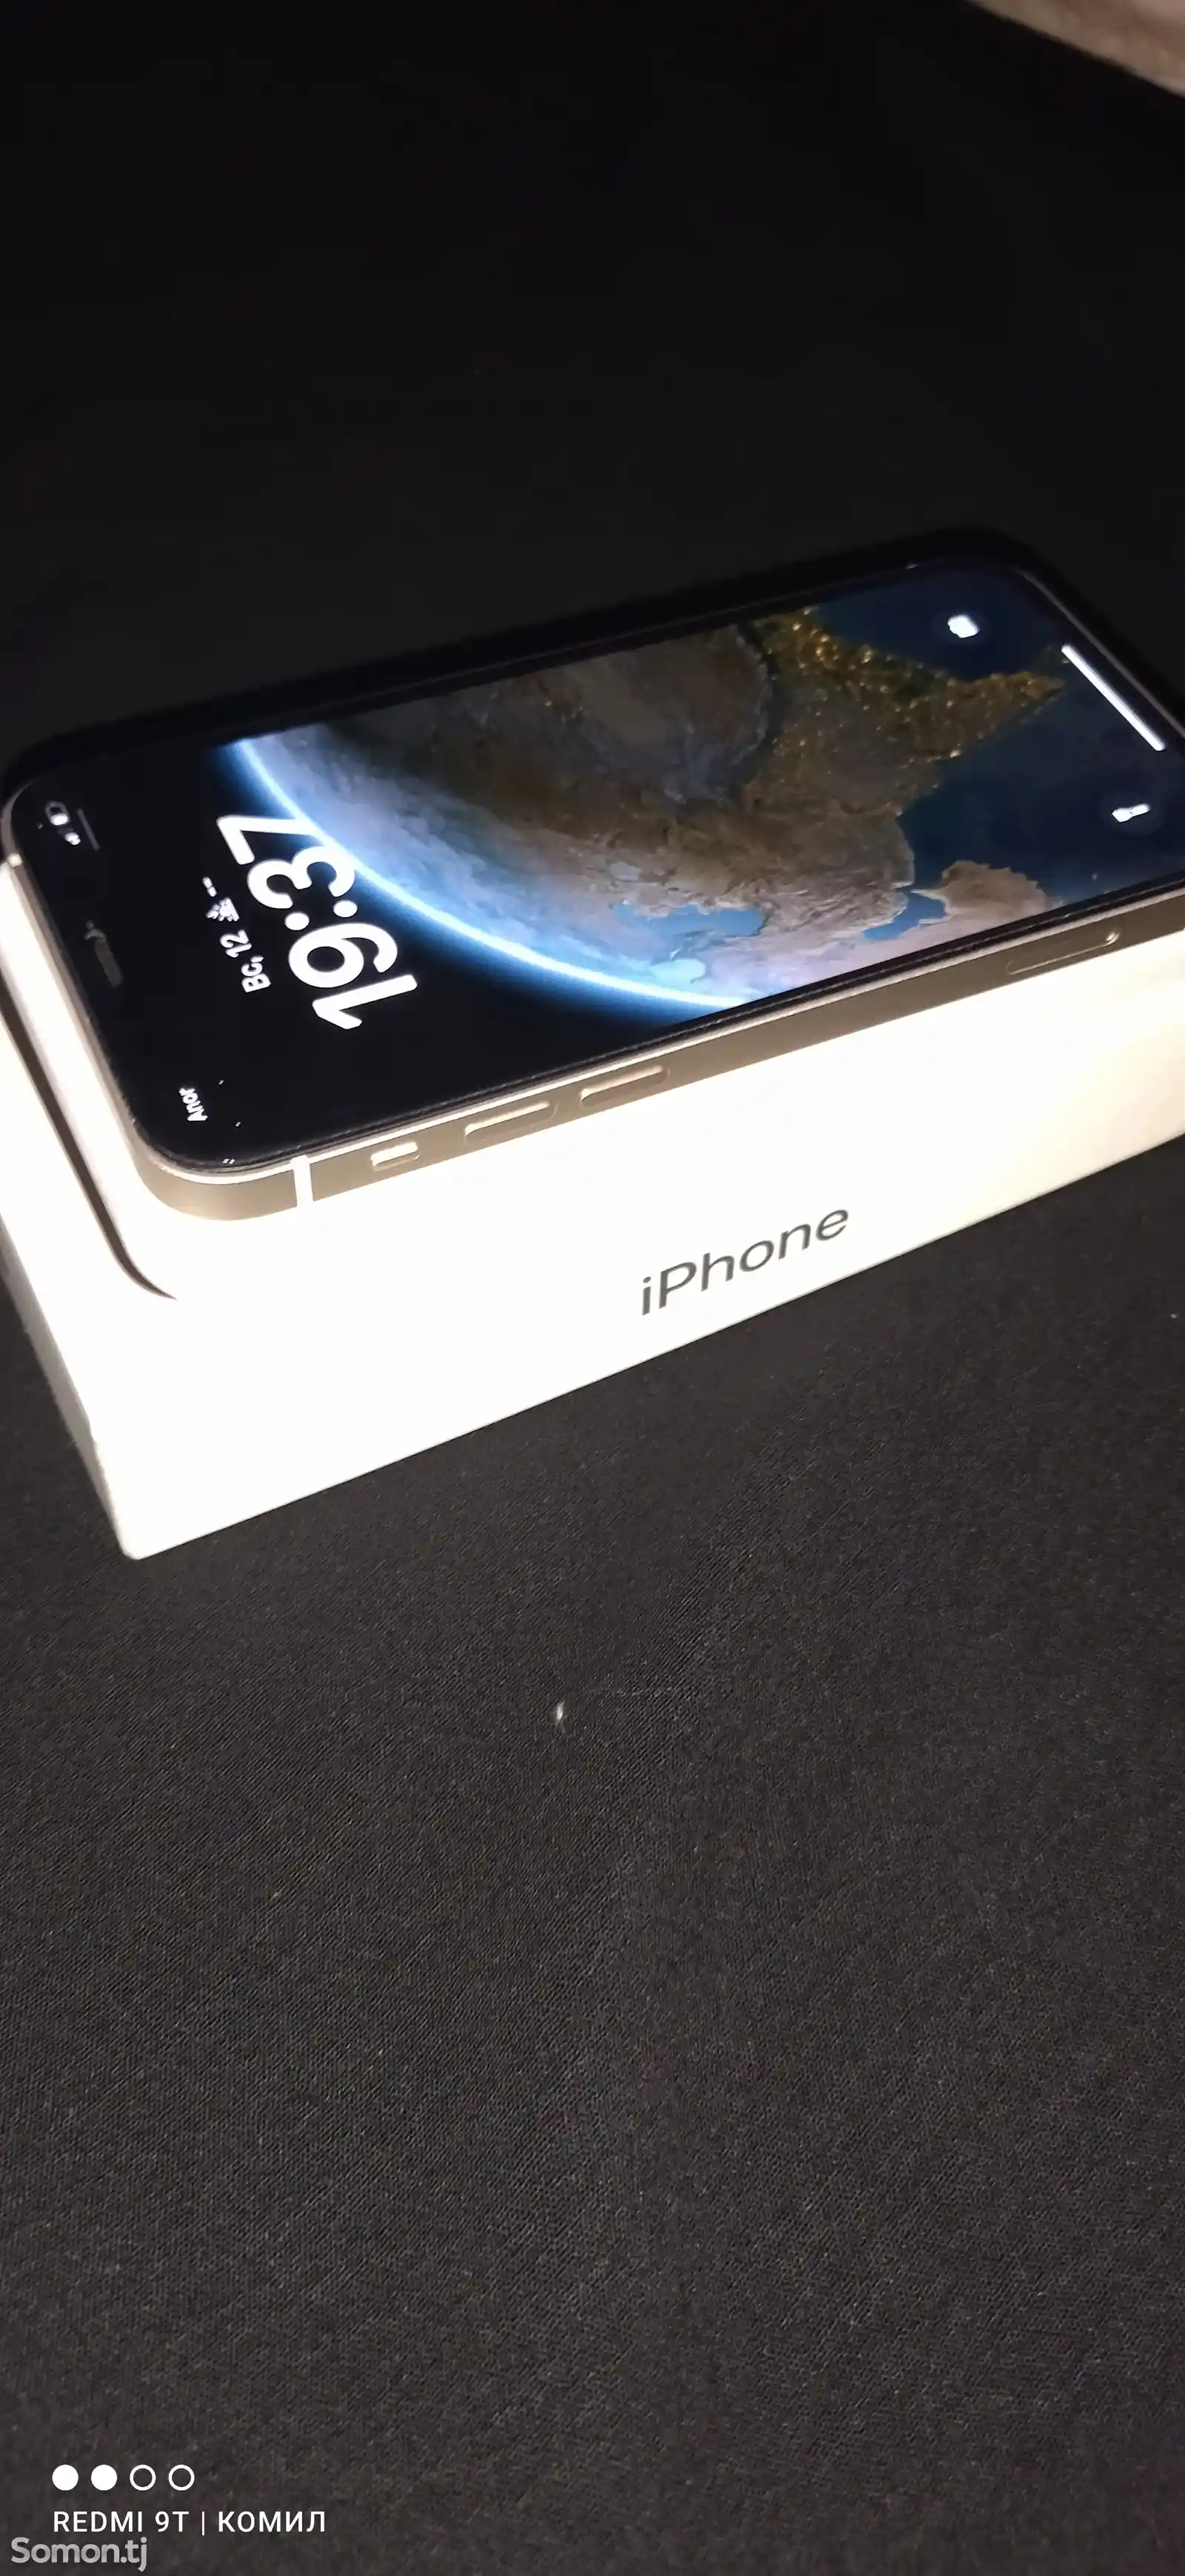 Apple iPhone 12, 128 gb, White-4